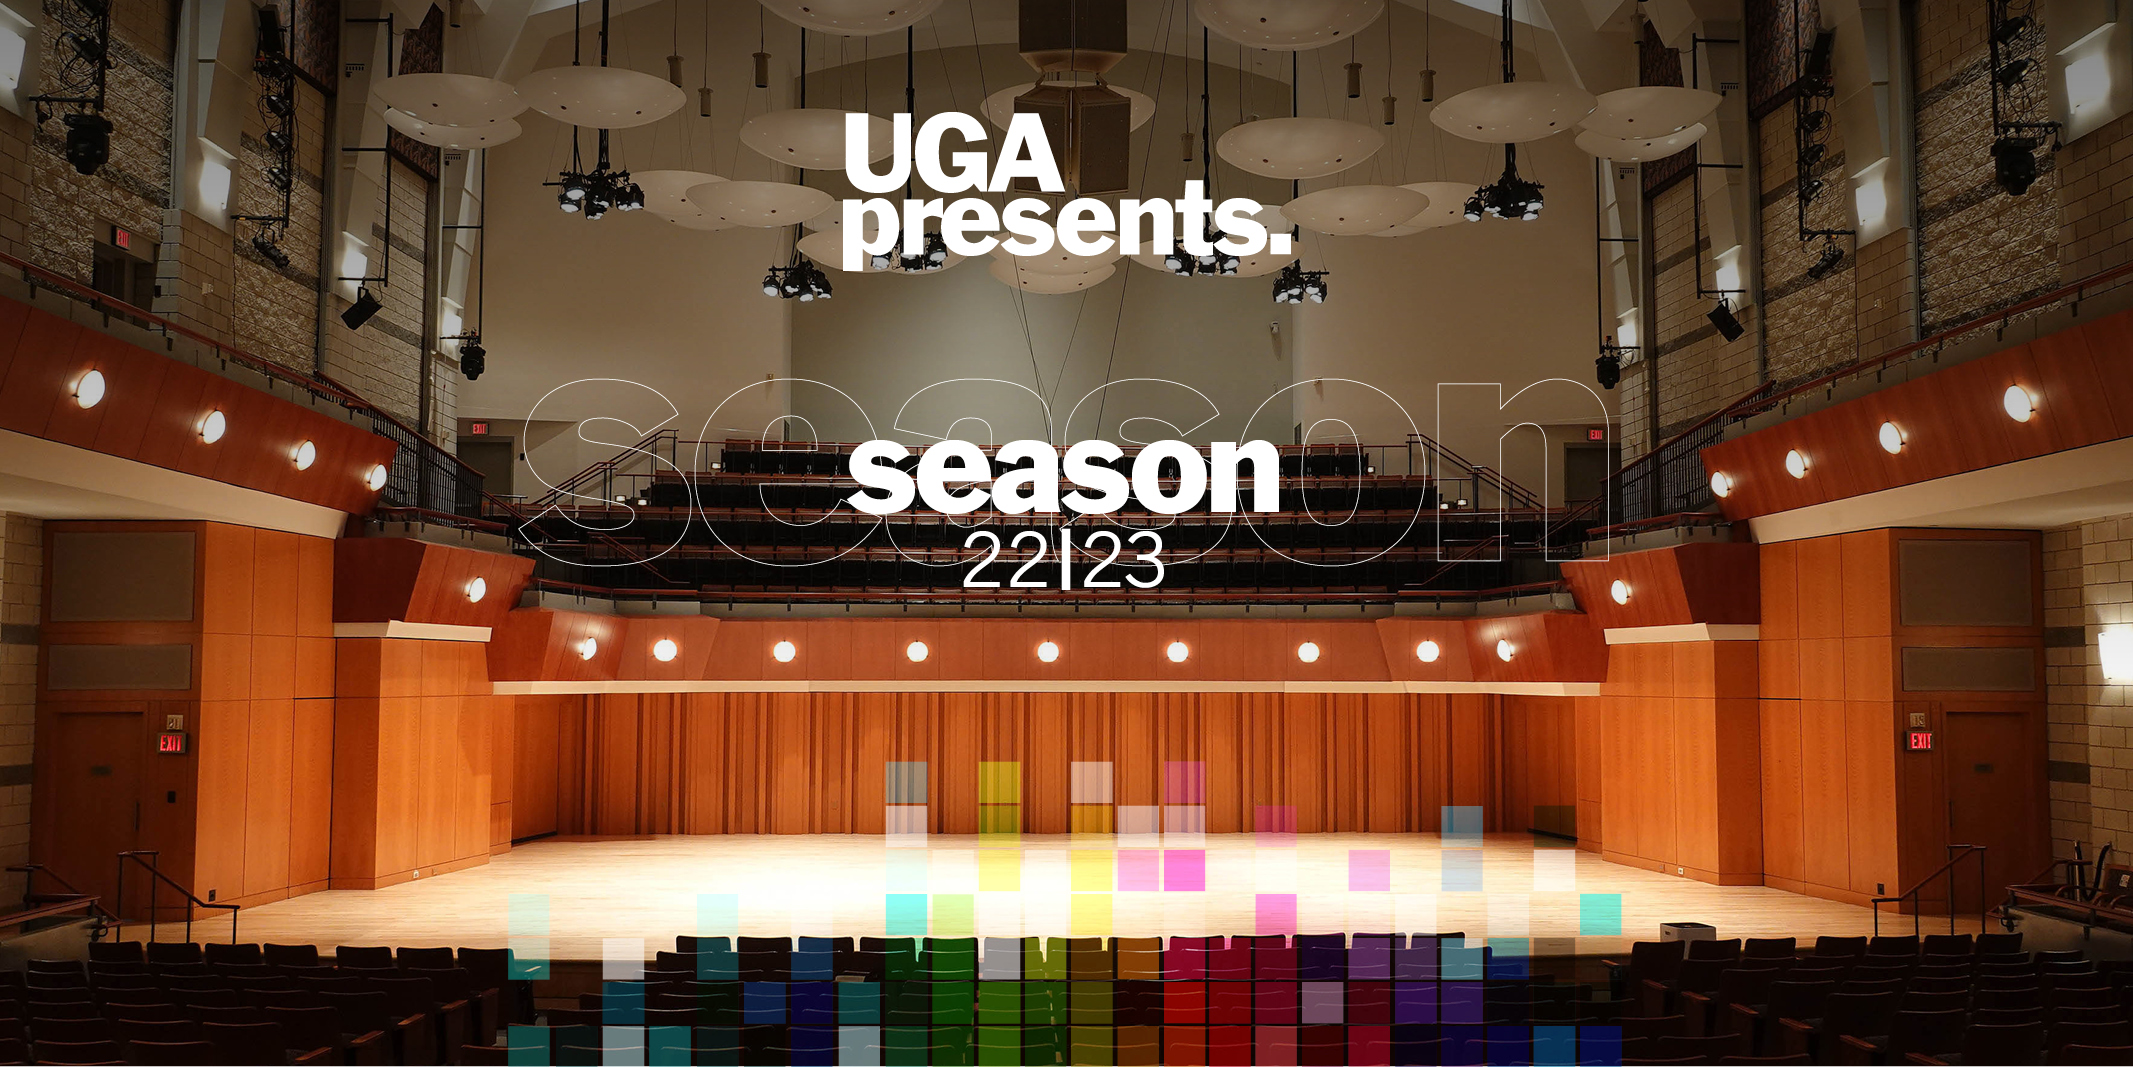 Inside the Season: Important Dates for the 2022-23 UGA Presents Season